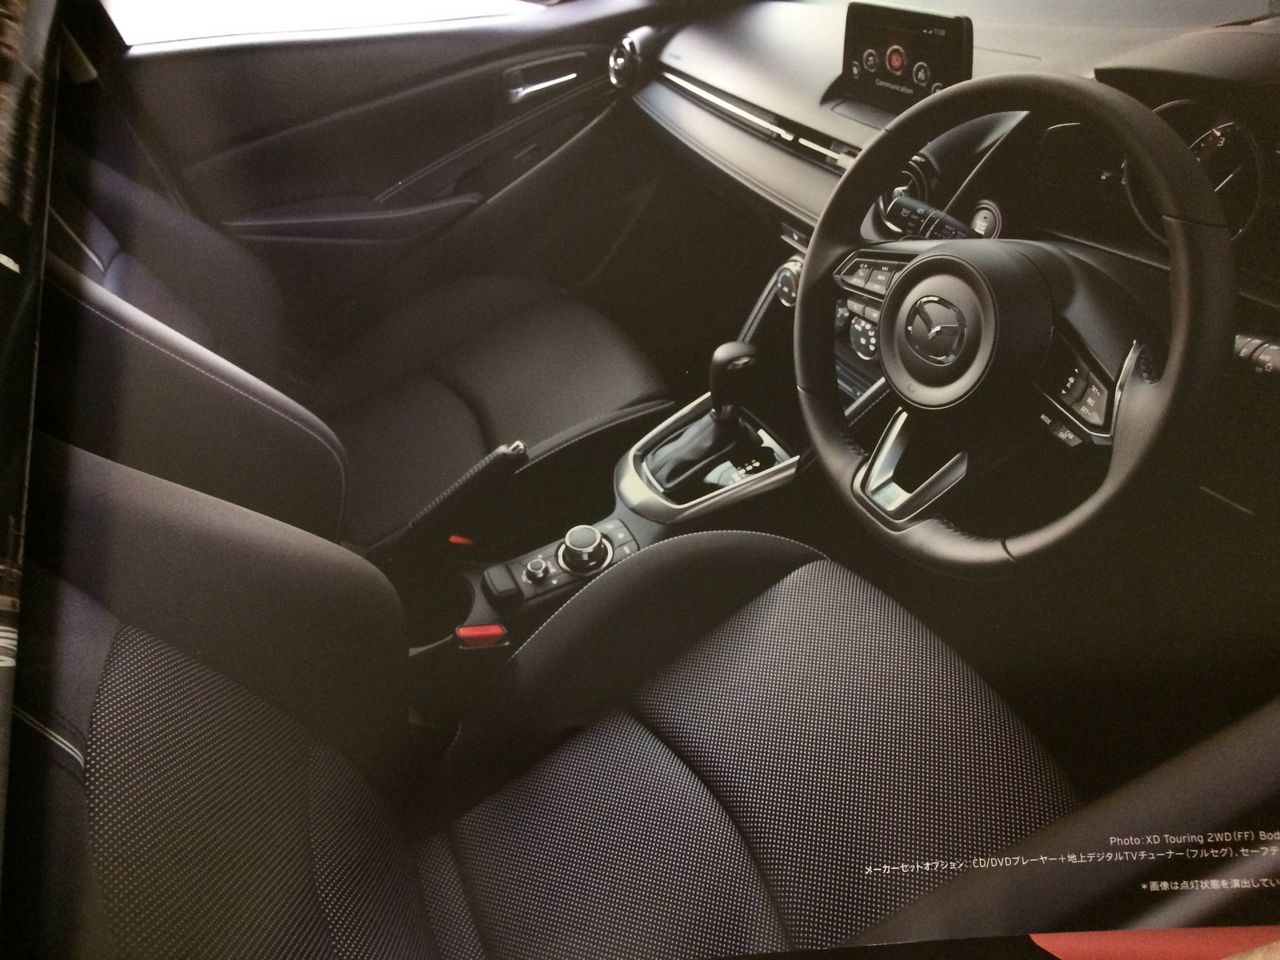 International, brosur-mazda-2-facelift-interior: Brosur Mazda 2 Facelift Bocor, Yuk Intip Ubahannya!